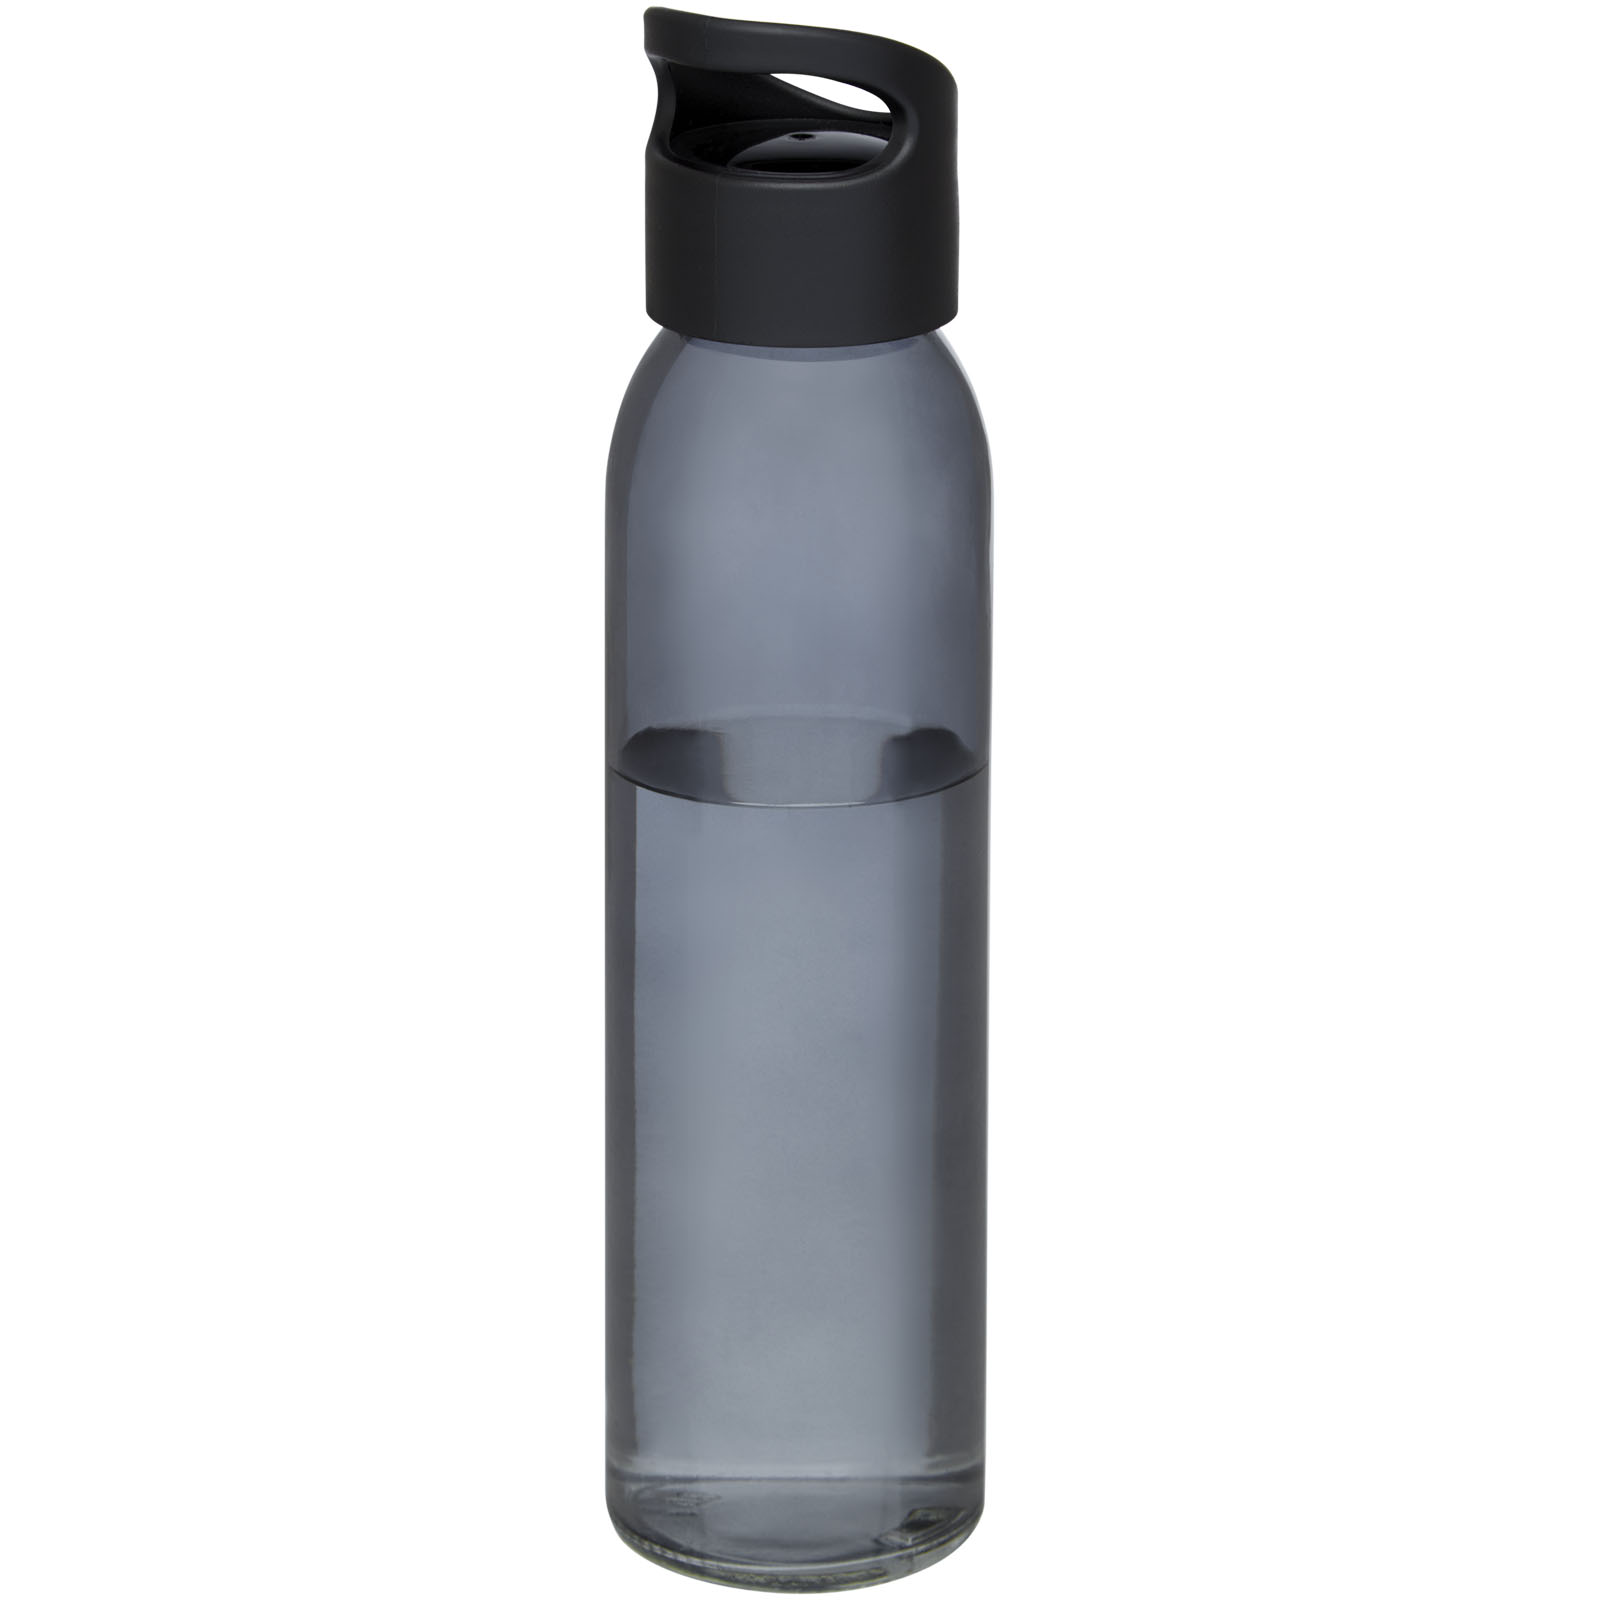 Advertising Water bottles - Sky 500 ml glass water bottle